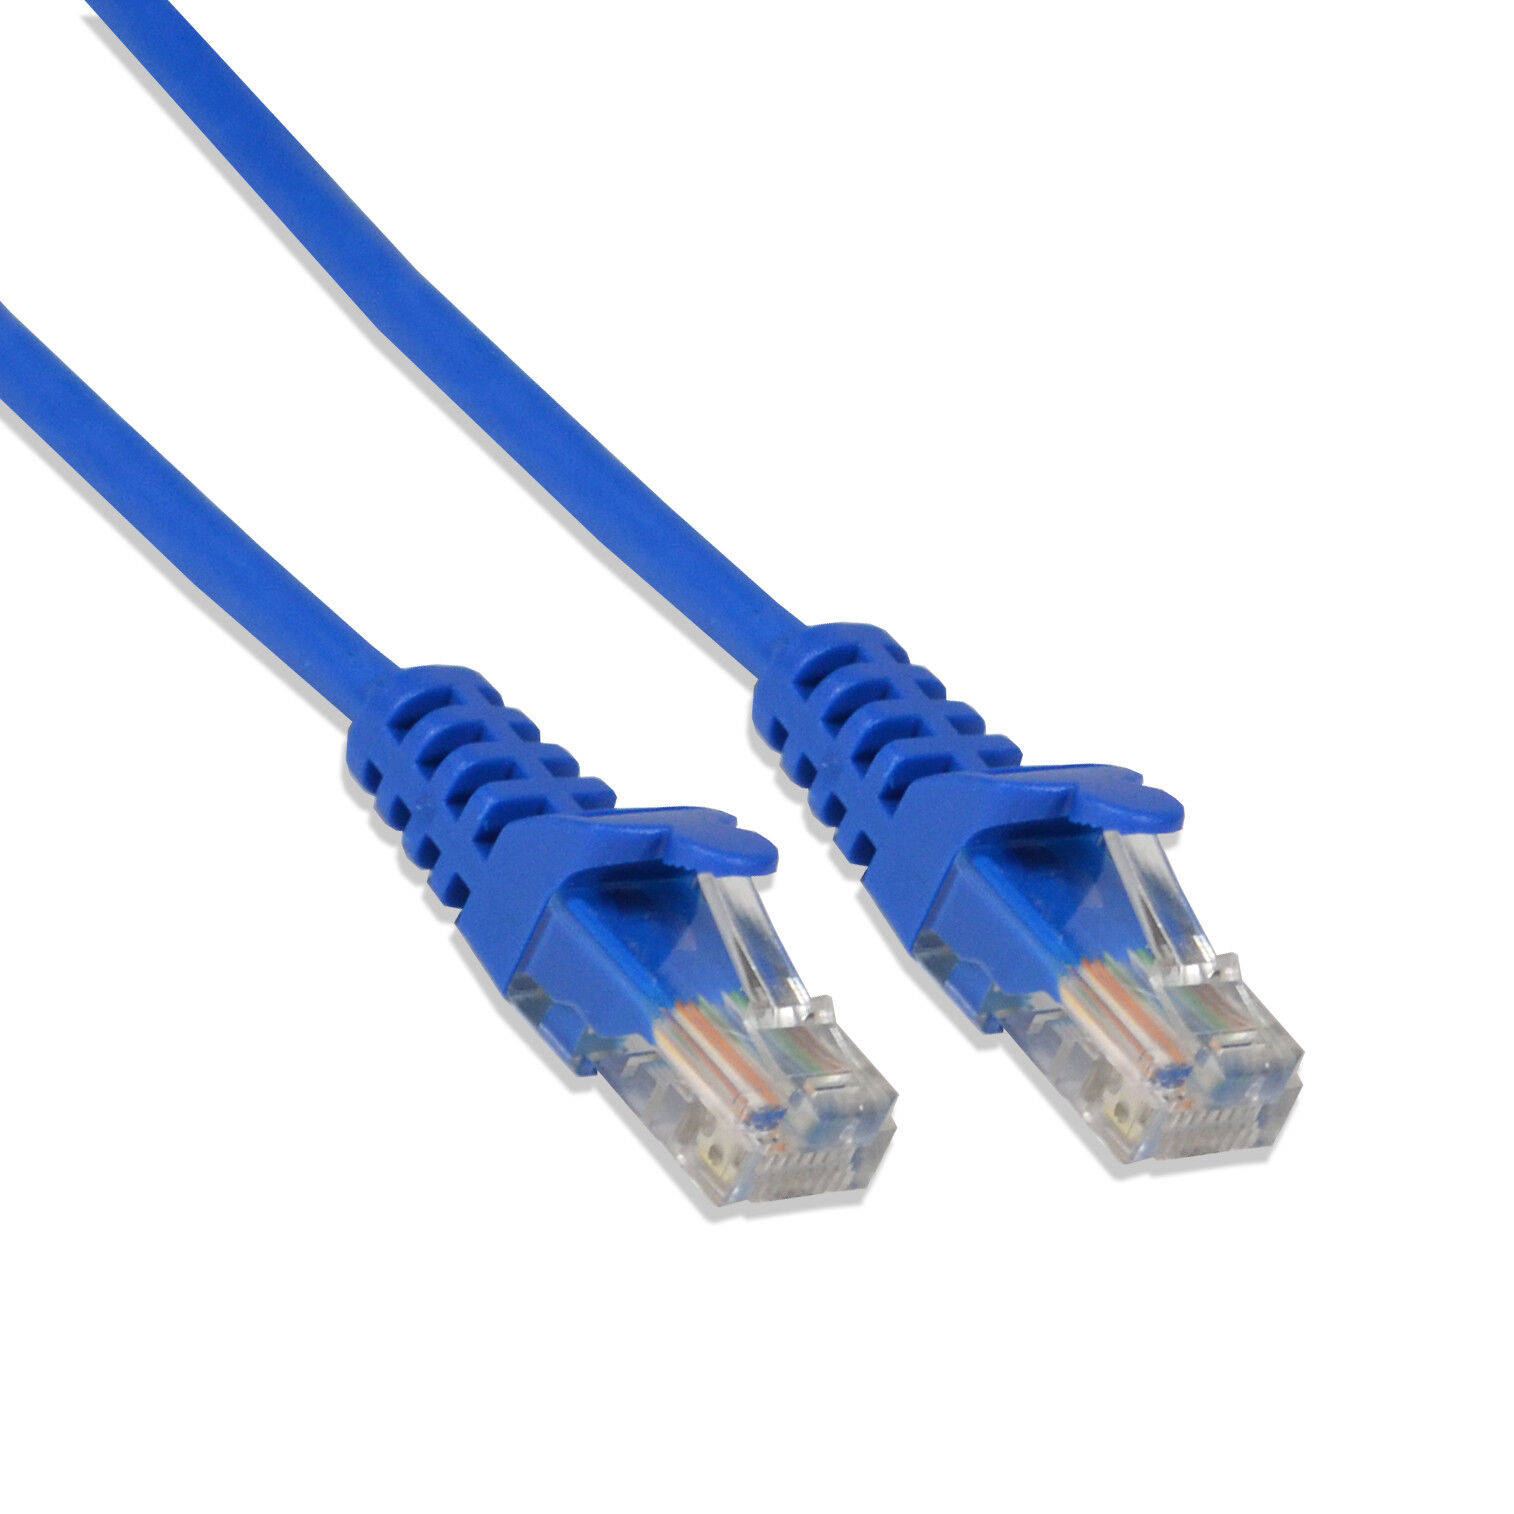 5ft Cat5e Cable Ethernet Lan Network RJ45 Patch Cord Internet Blue (50 Pack)